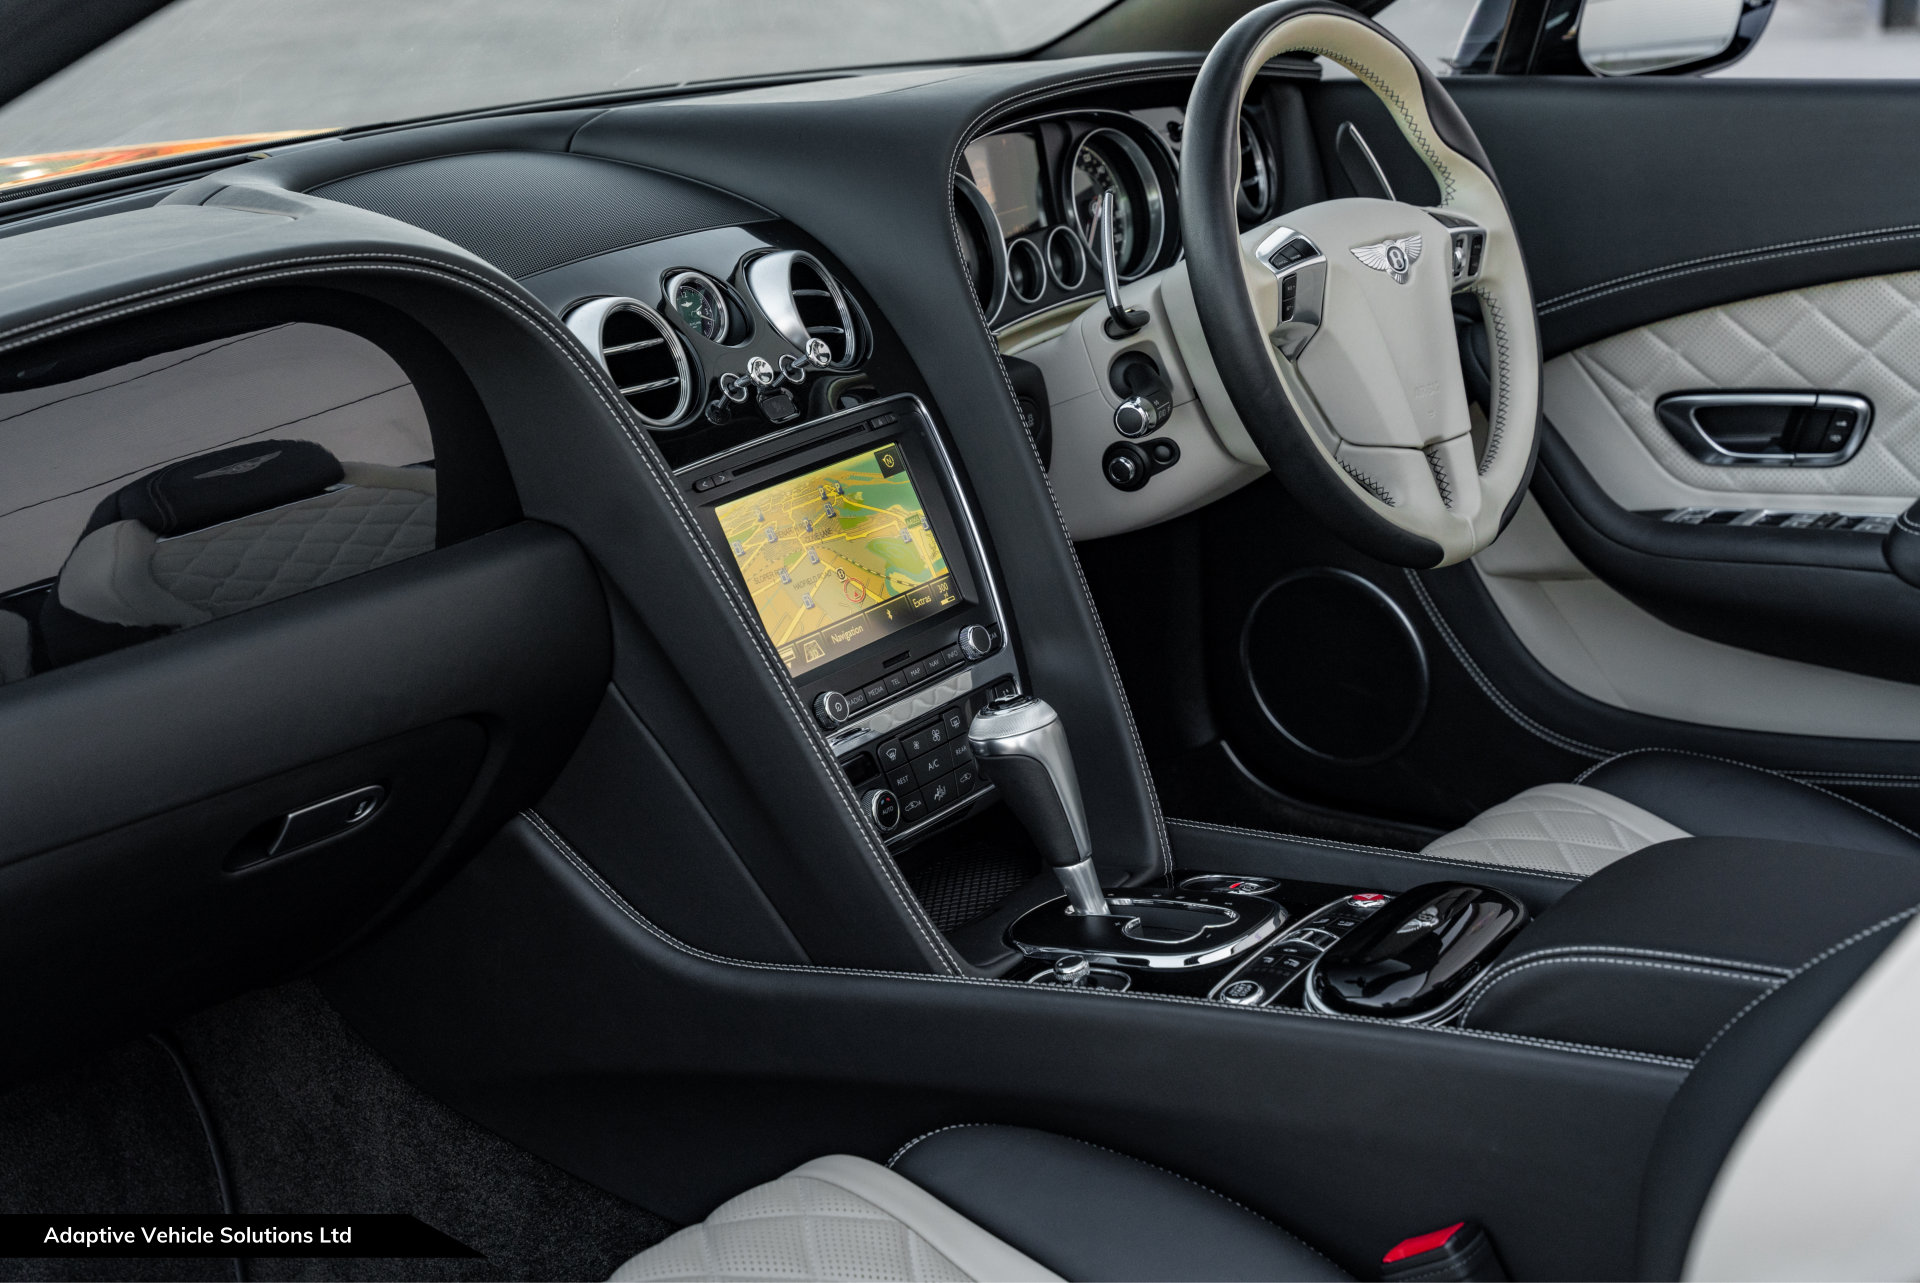 2016 Bentley Continental GTC V8 S Mulliner DS Black passenger side interior view